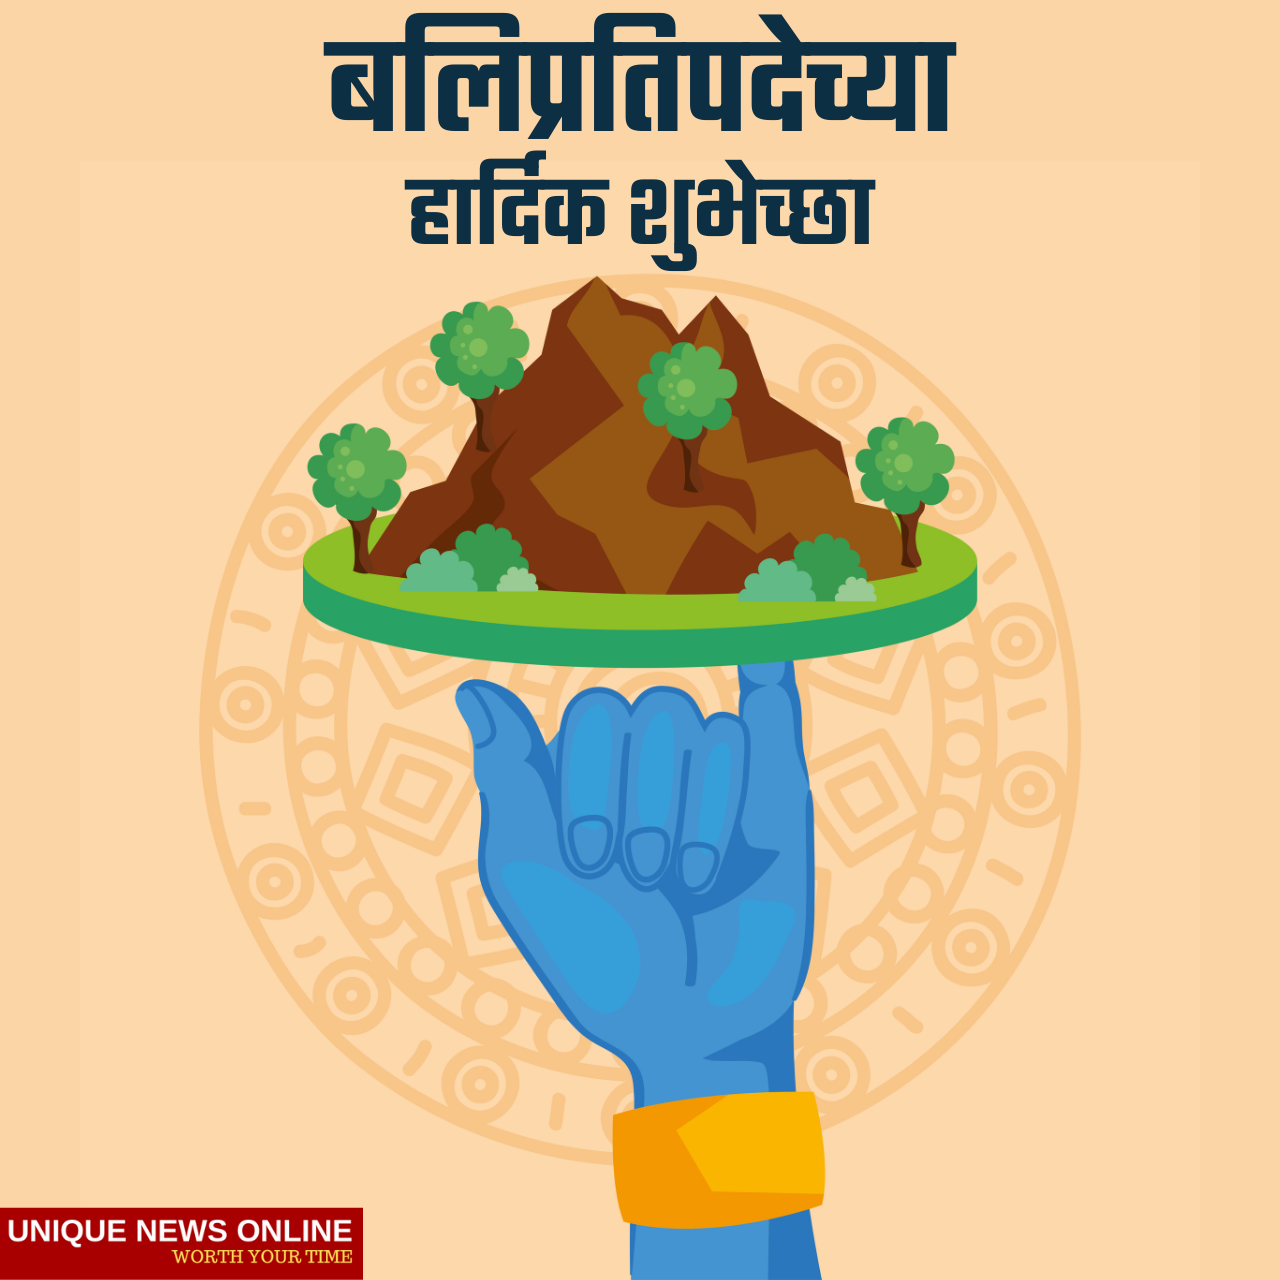 Balipratipada 2021 Marathi Wishes, HD Images, Quotes, Shayari, Status to greet your Loved Ones on Govardhan Puja